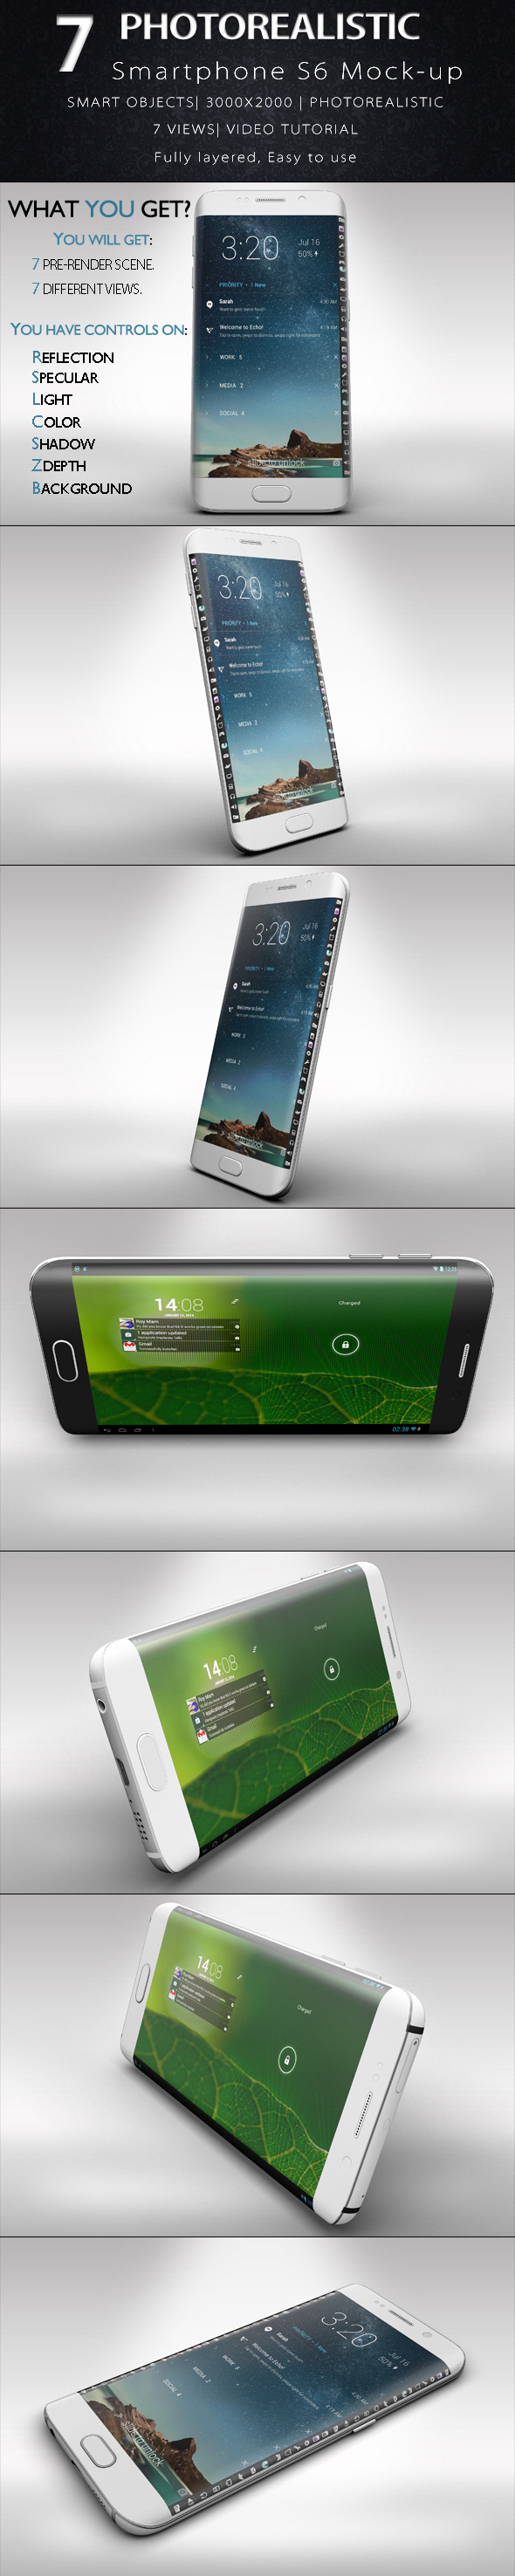 Samsung-Galaxy-s6-edge-v.2